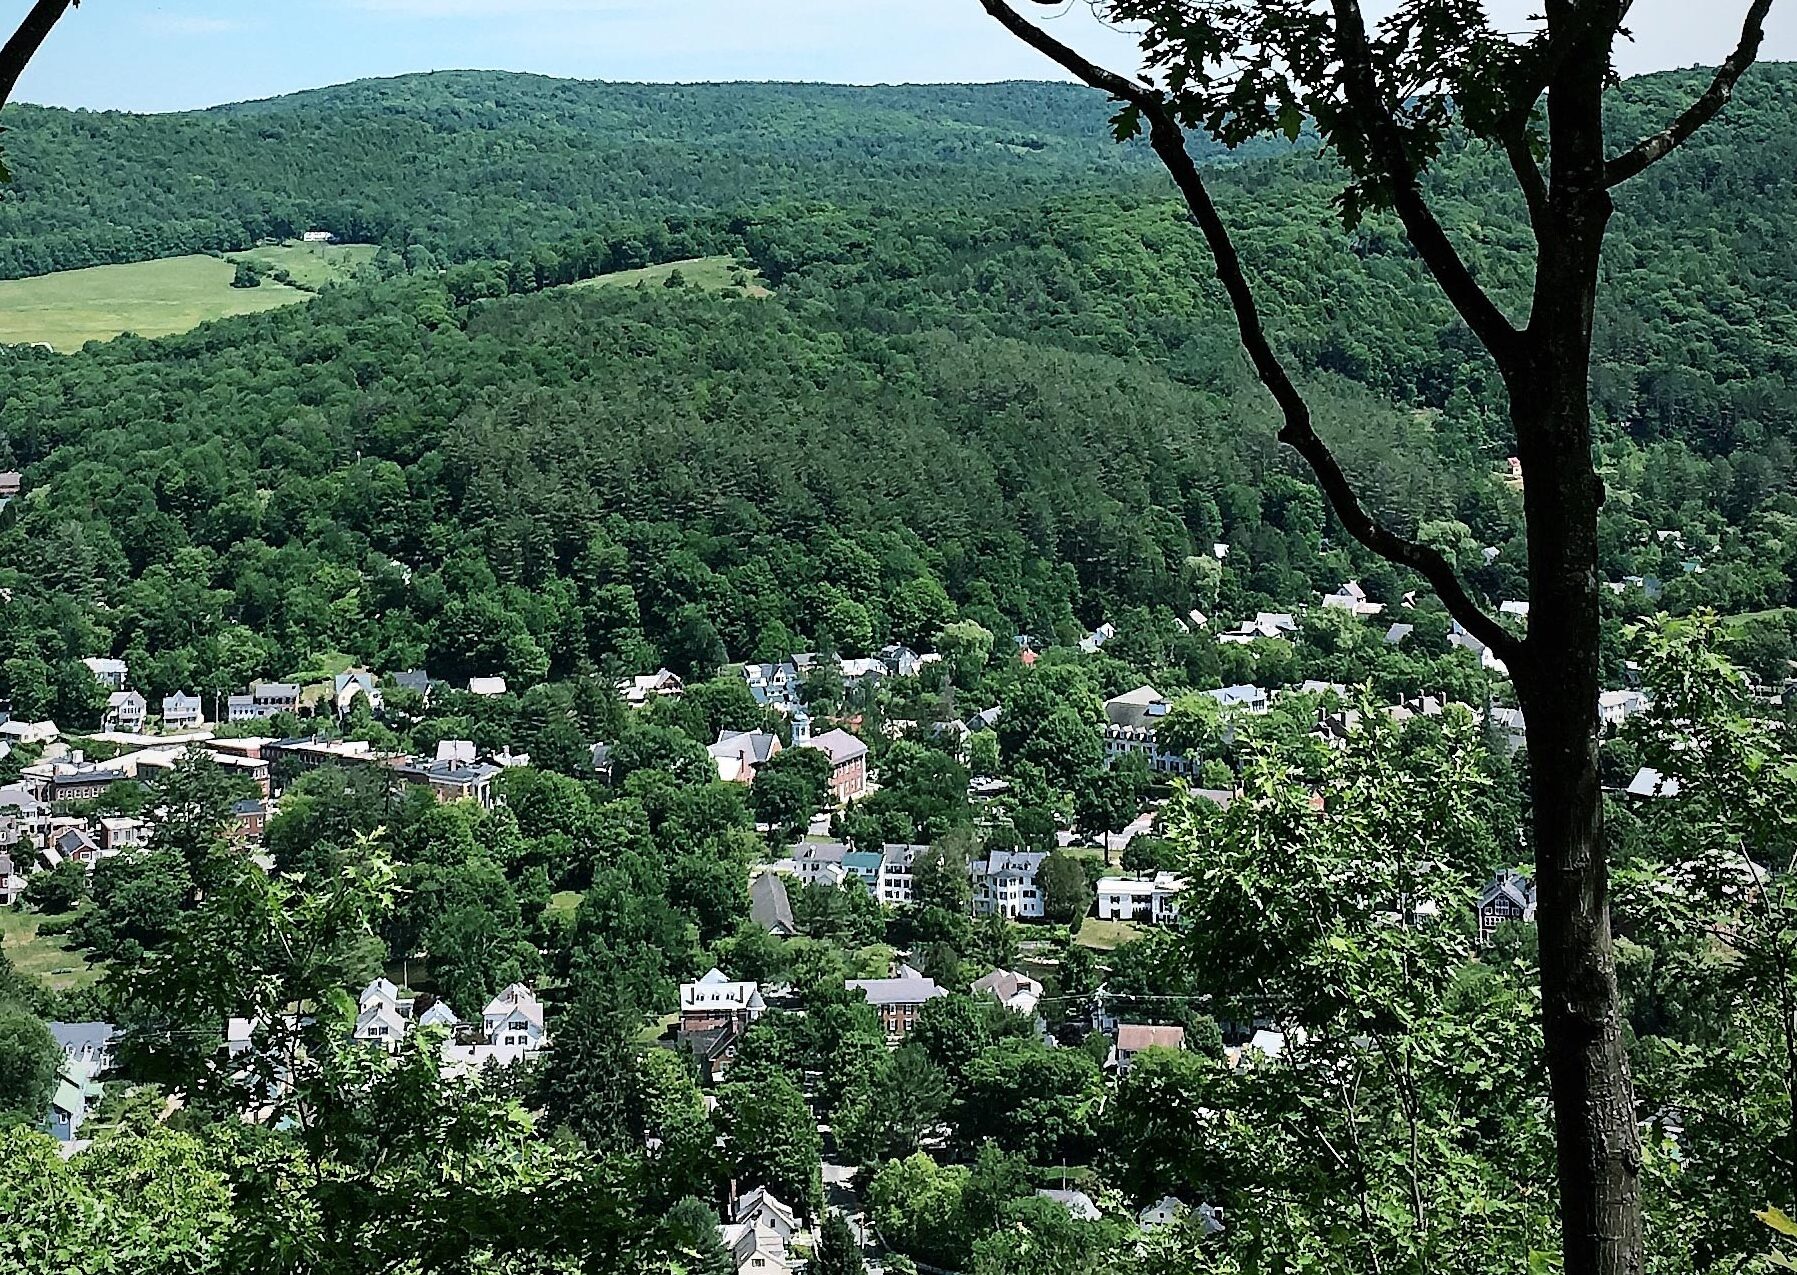 Mount Tom view of Woodstock